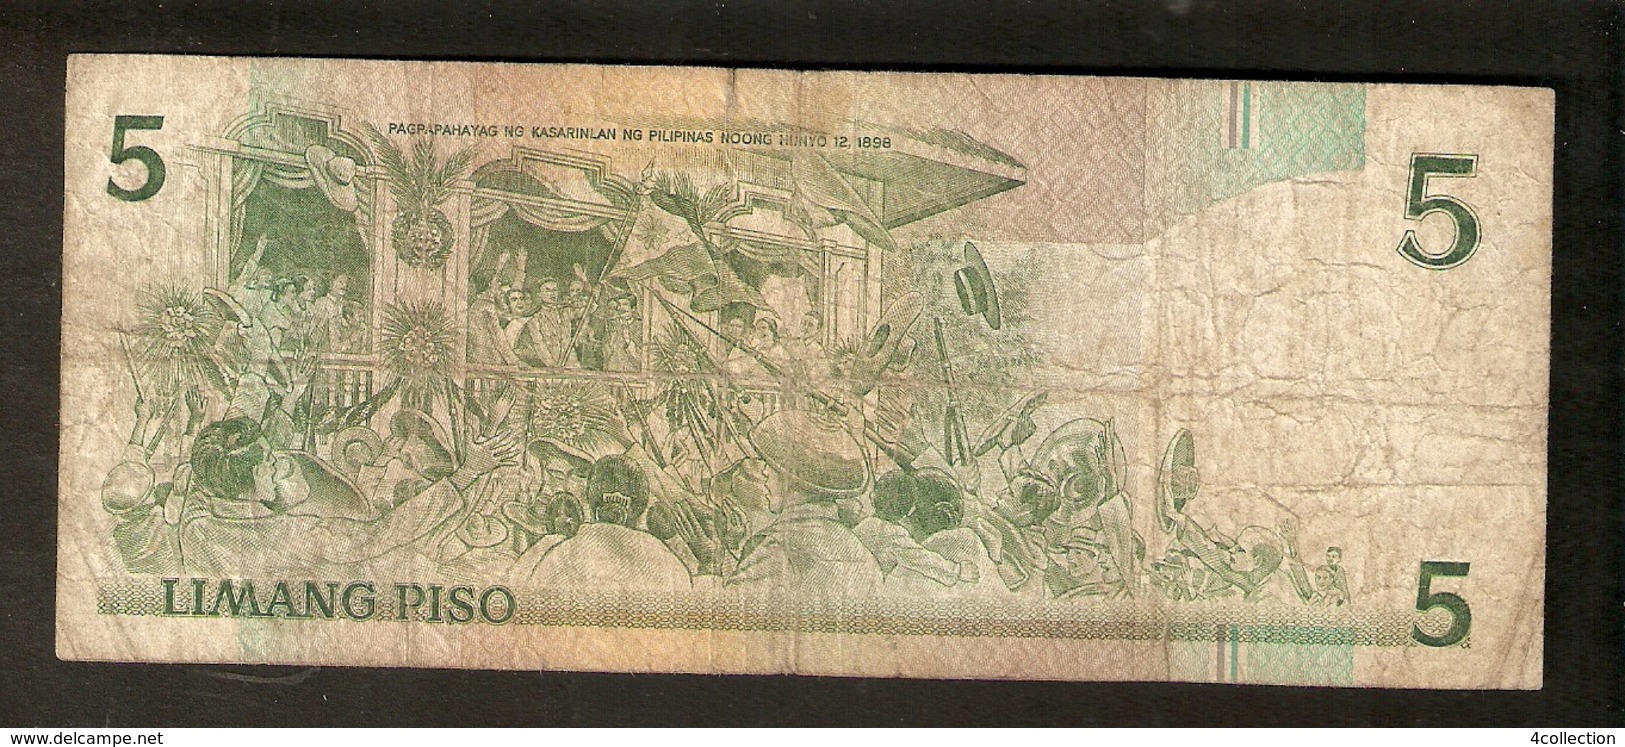 T. Philippines Republika Ng Pilipinas Limang Piso 5 Pesos ( 1956 ) Emilio Aguinaldo Ser. PY 341896 - Philippines